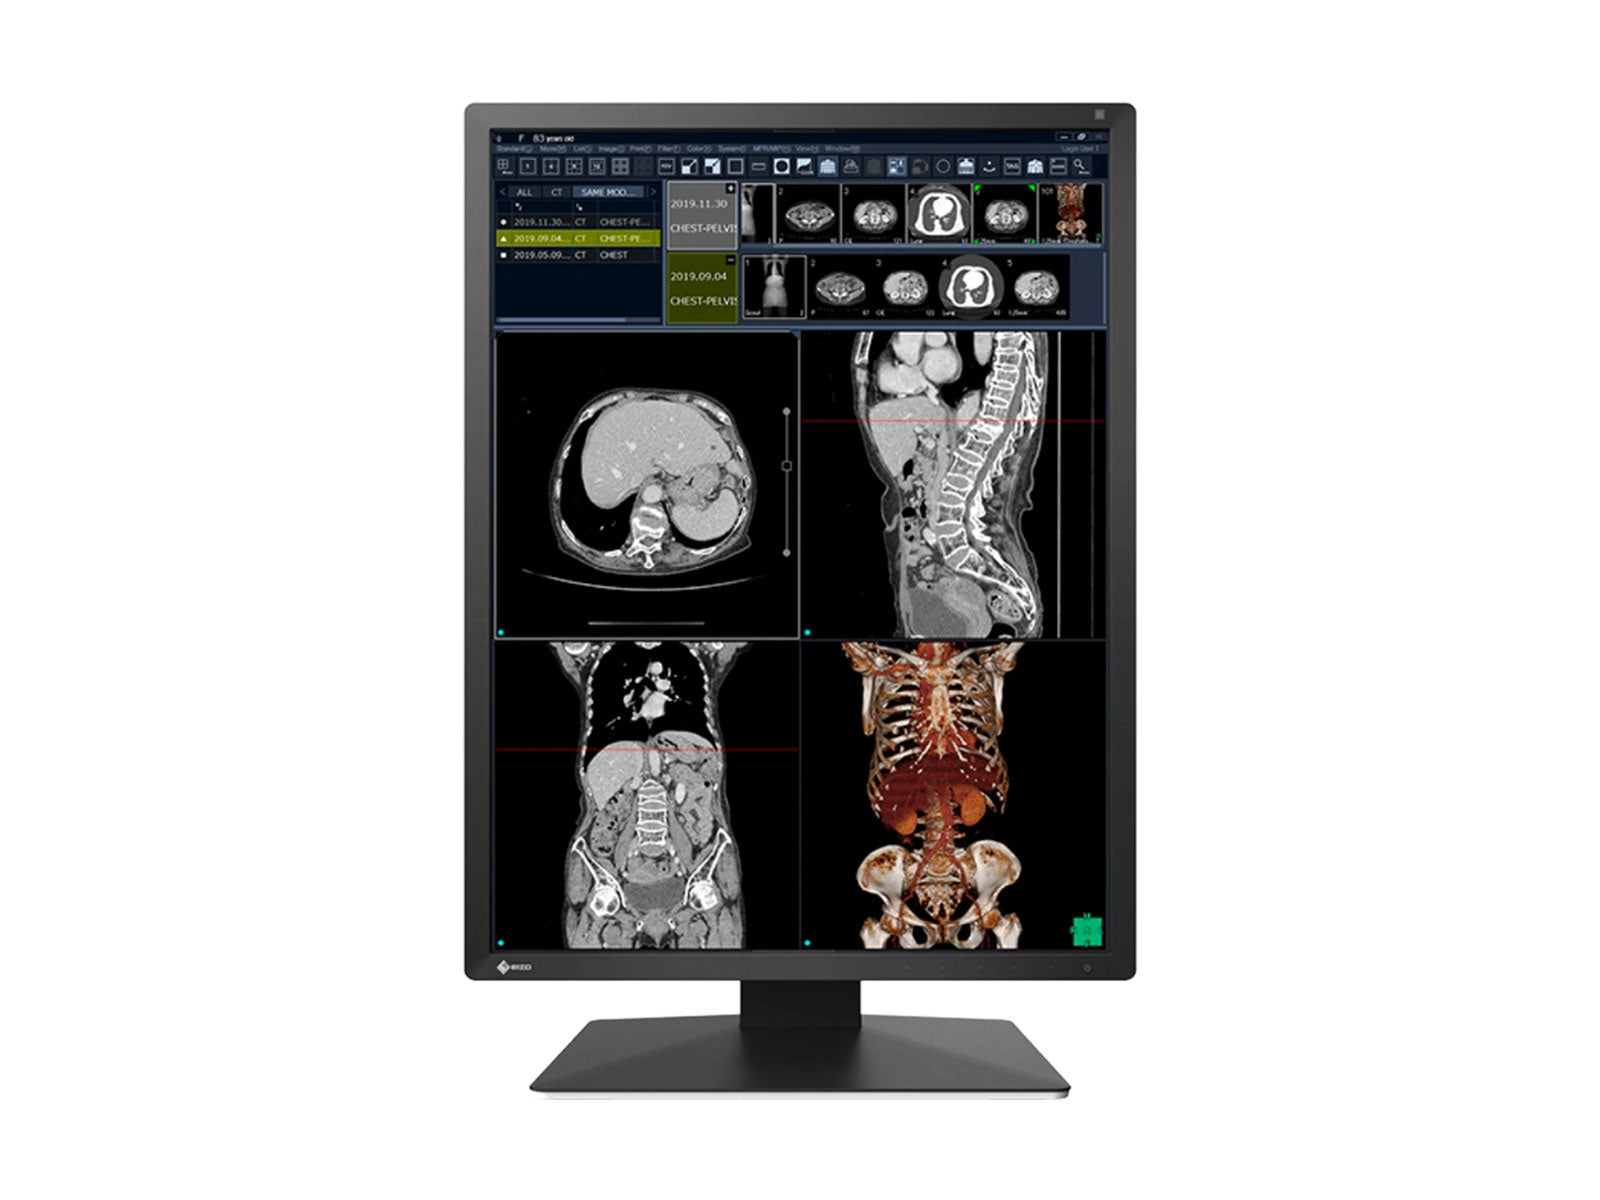 Eizo RadiForce RX270 2MP 21" Farb-LED-Monitor für medizinische Diagnostik und Radiologie (RX270-BK)